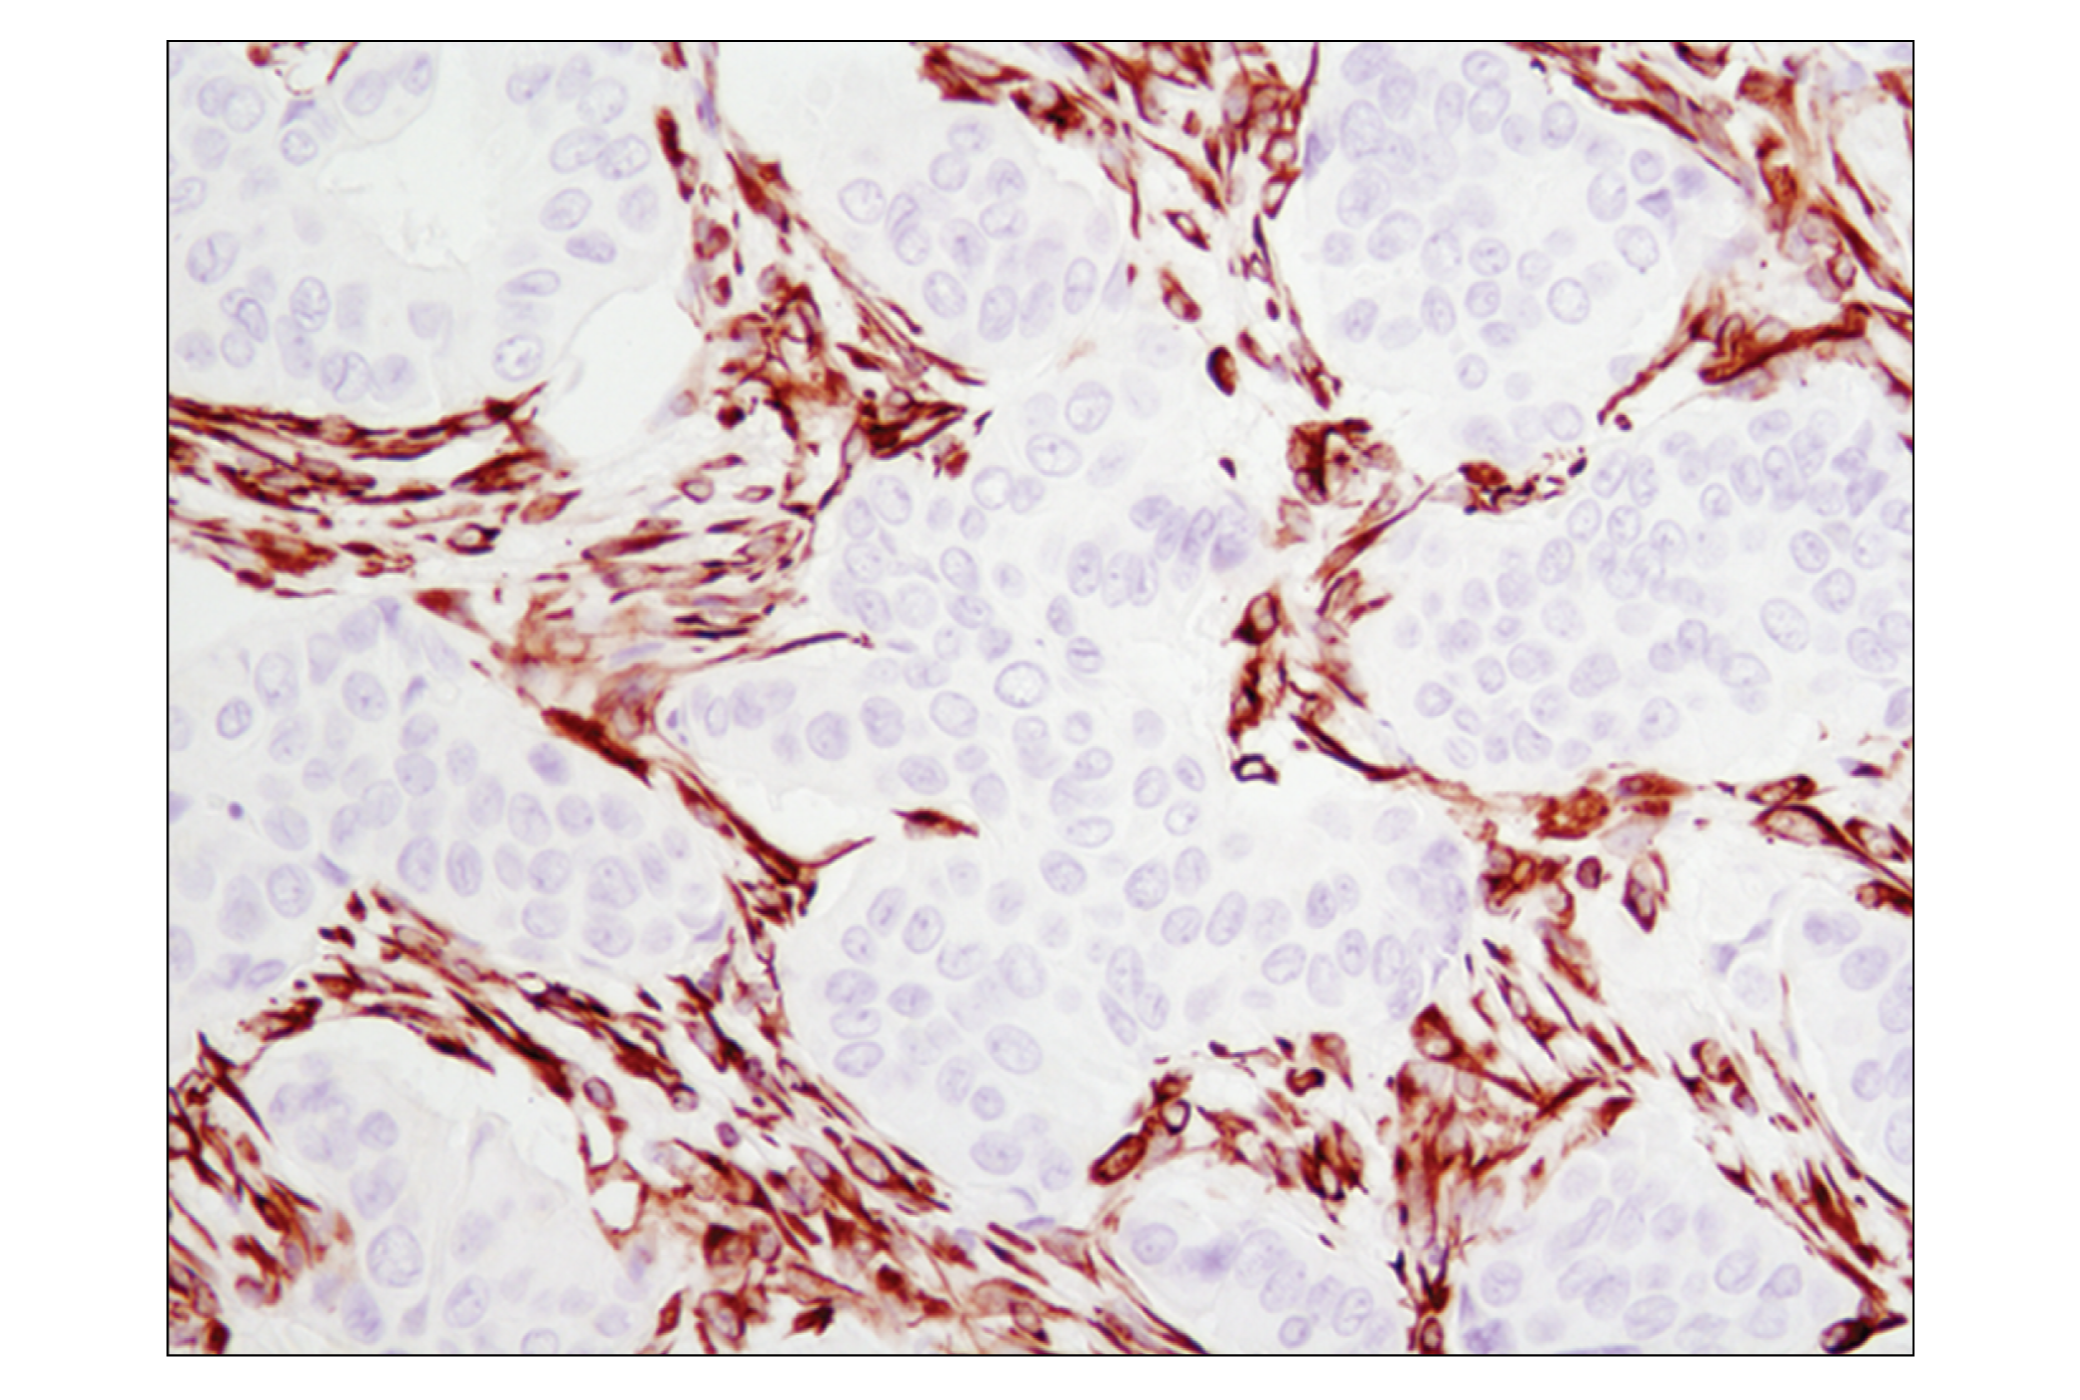  Image 36: Cancer Associated Fibroblast Marker Antibody Sampler Kit